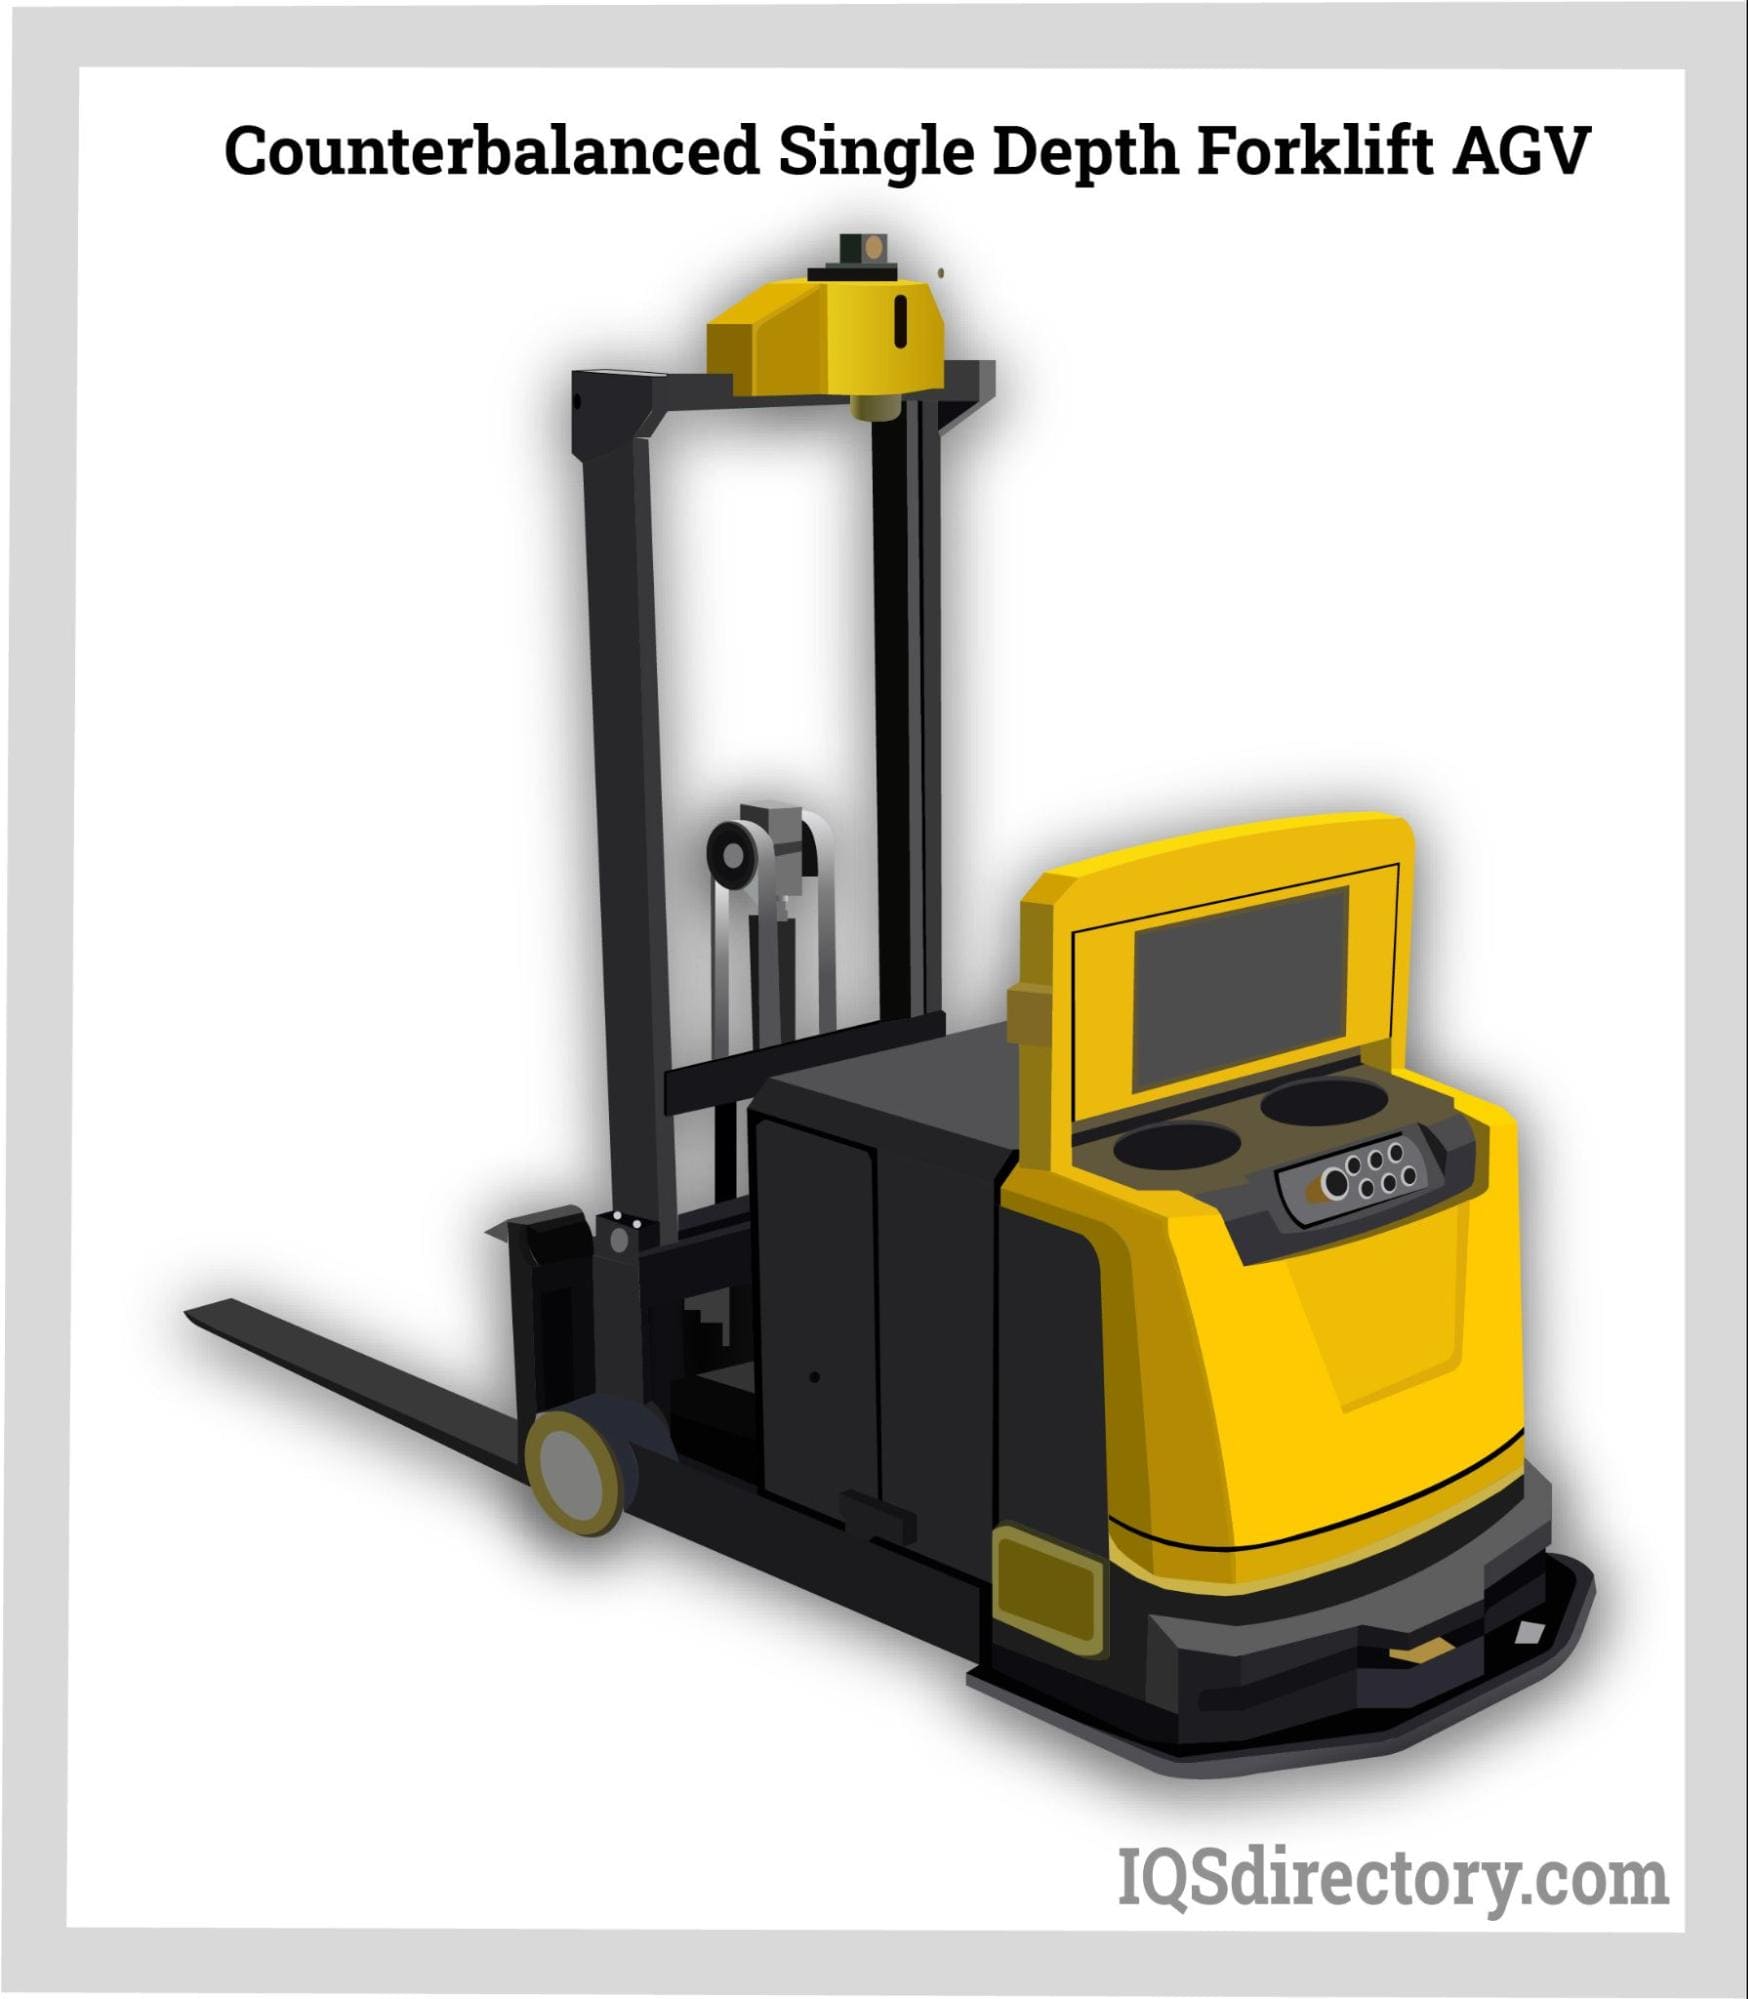 Counterbalanced Single Depth Forklift AGV